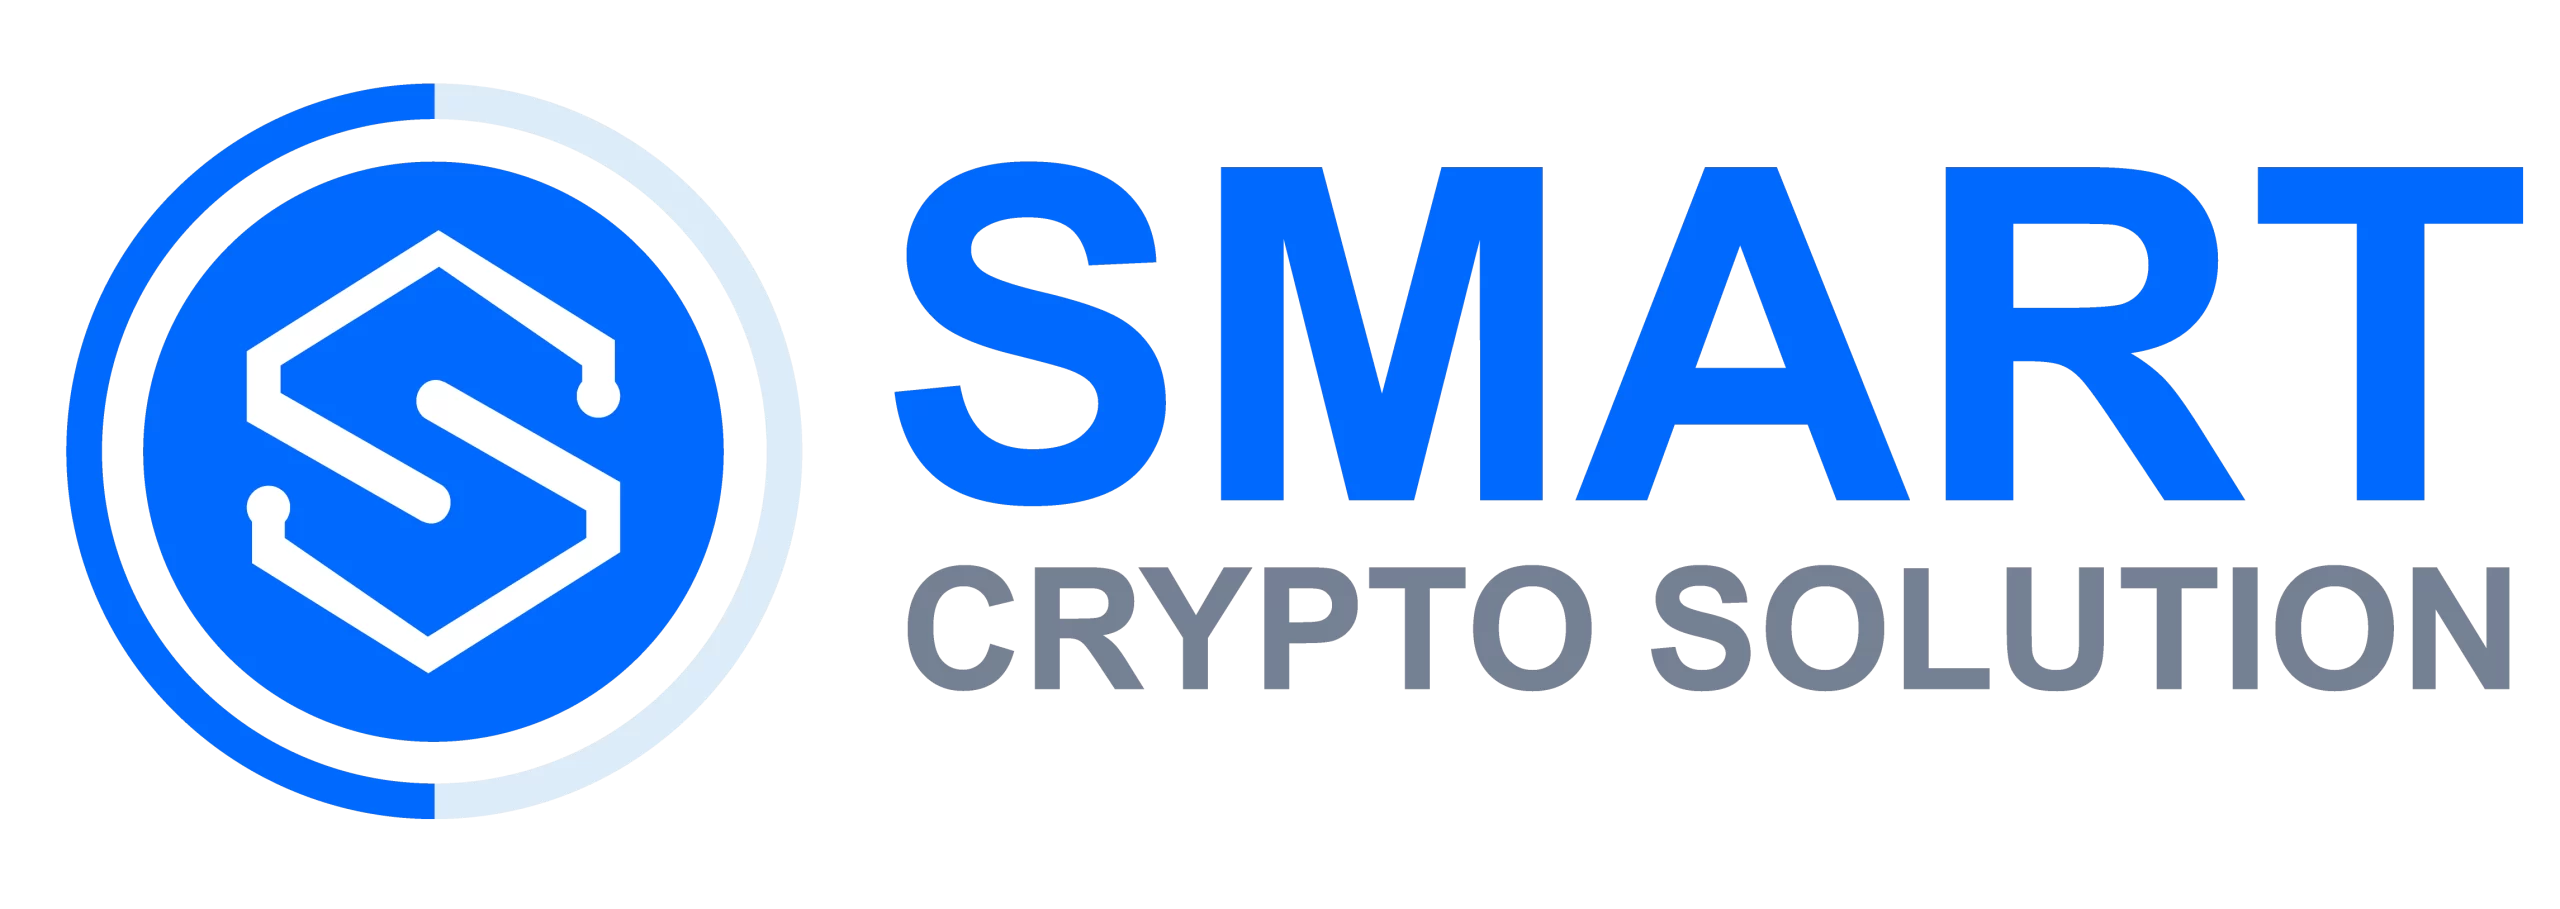 Smart Crypto Solution logo